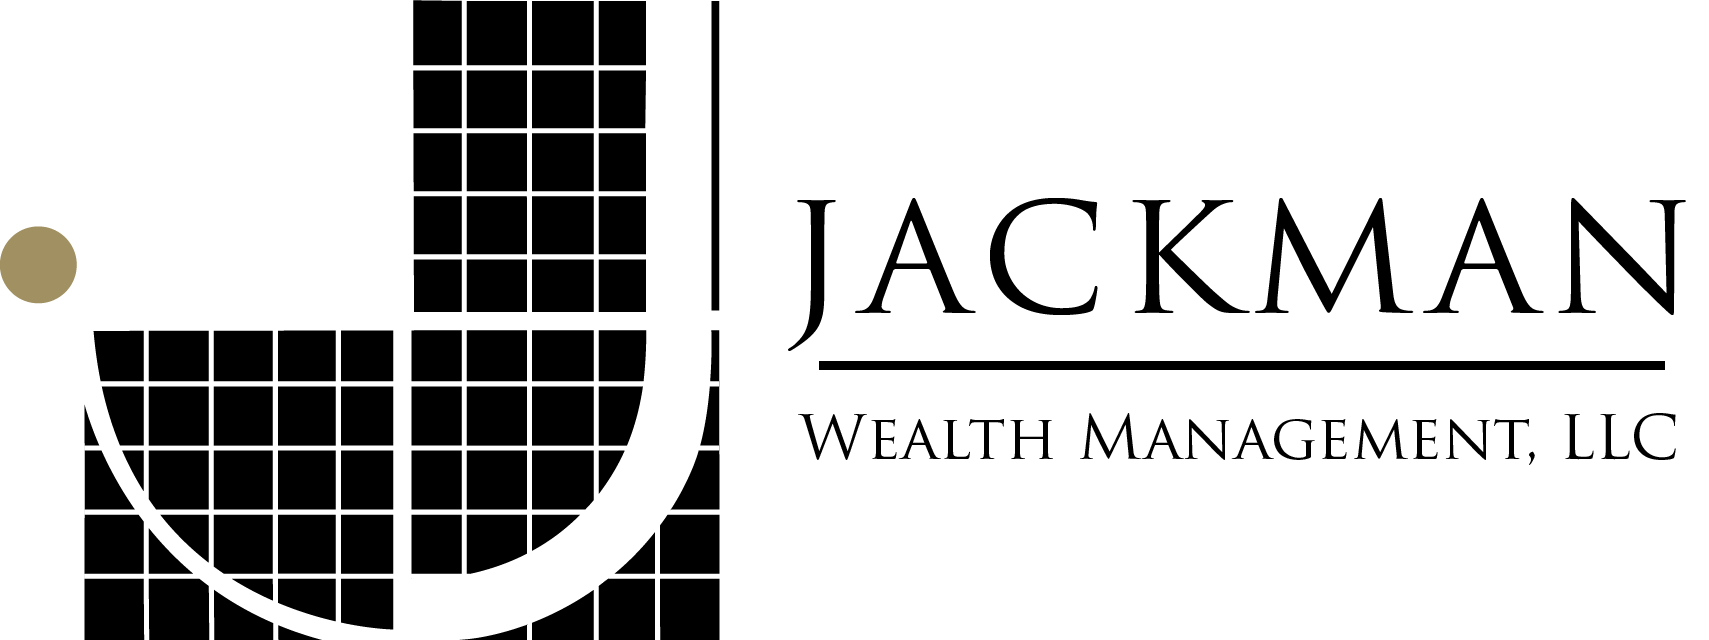 Jackman Wealth Management